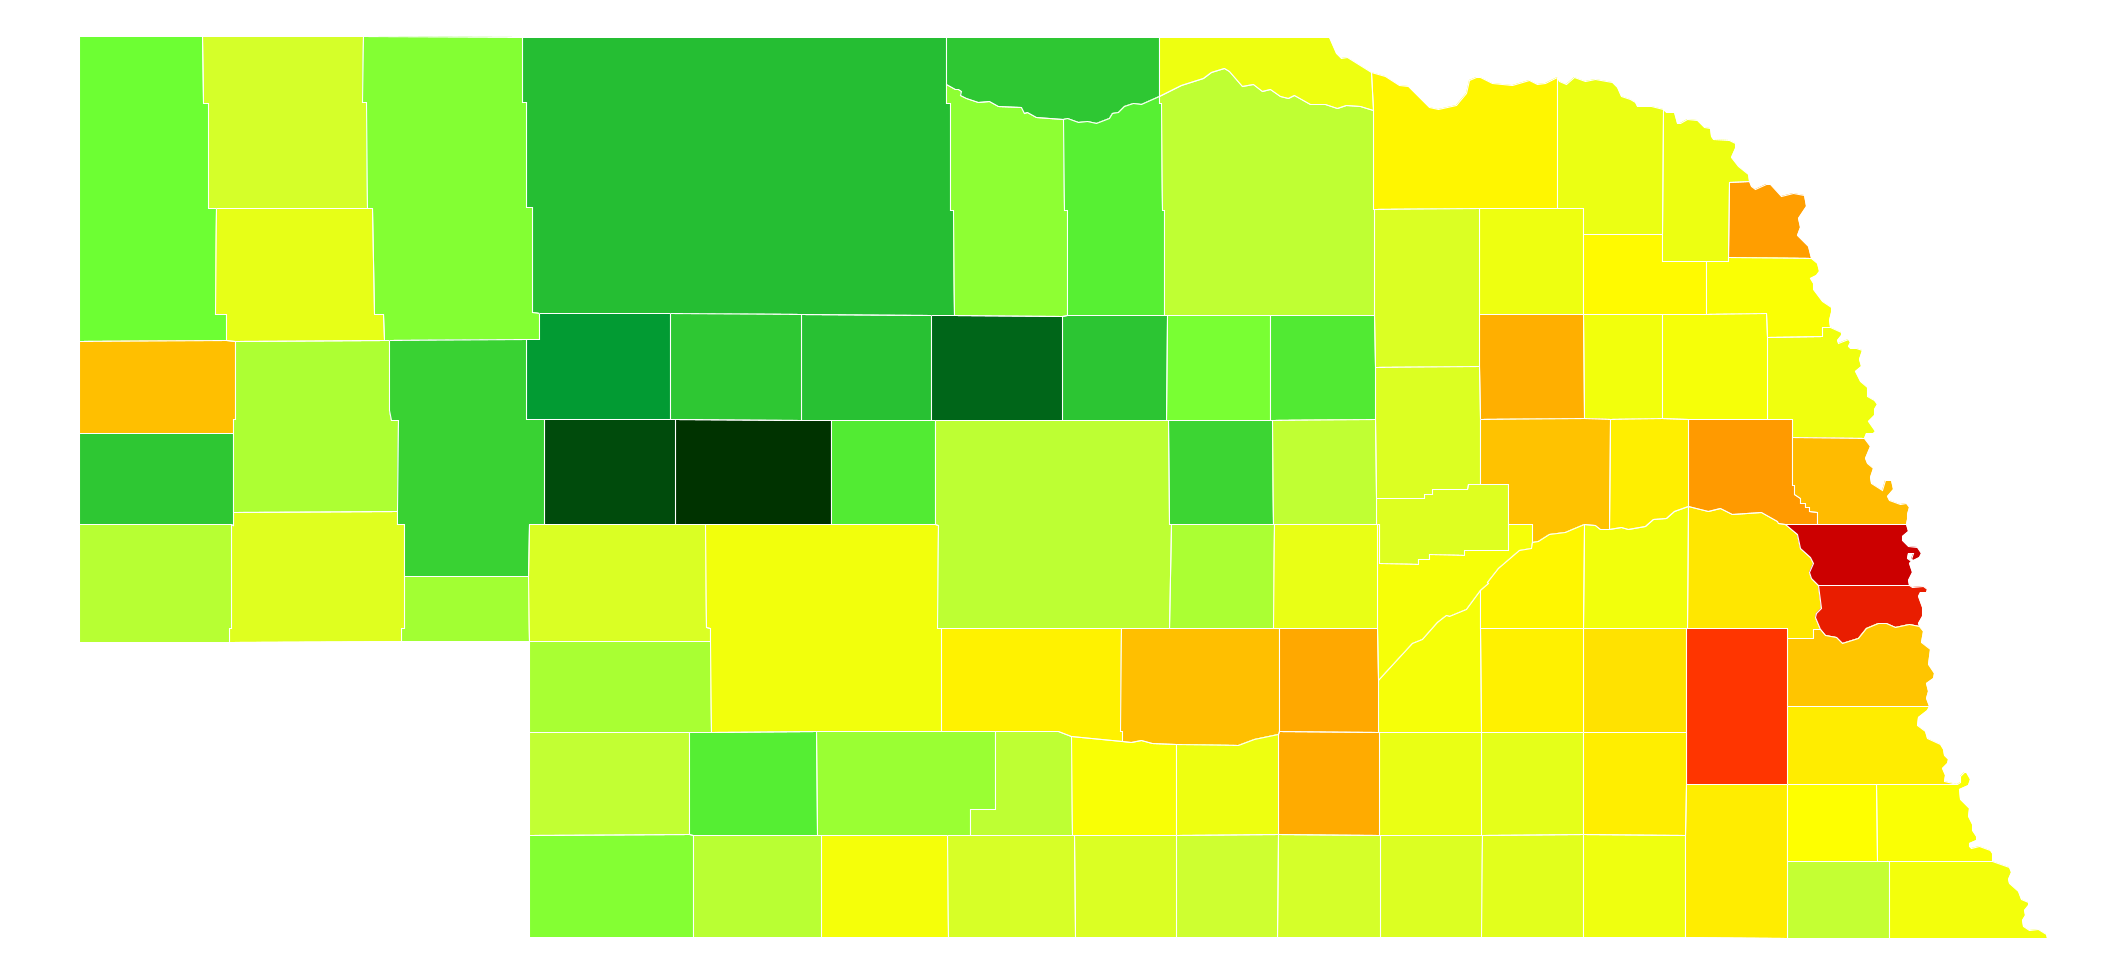 Nebraska Population Density